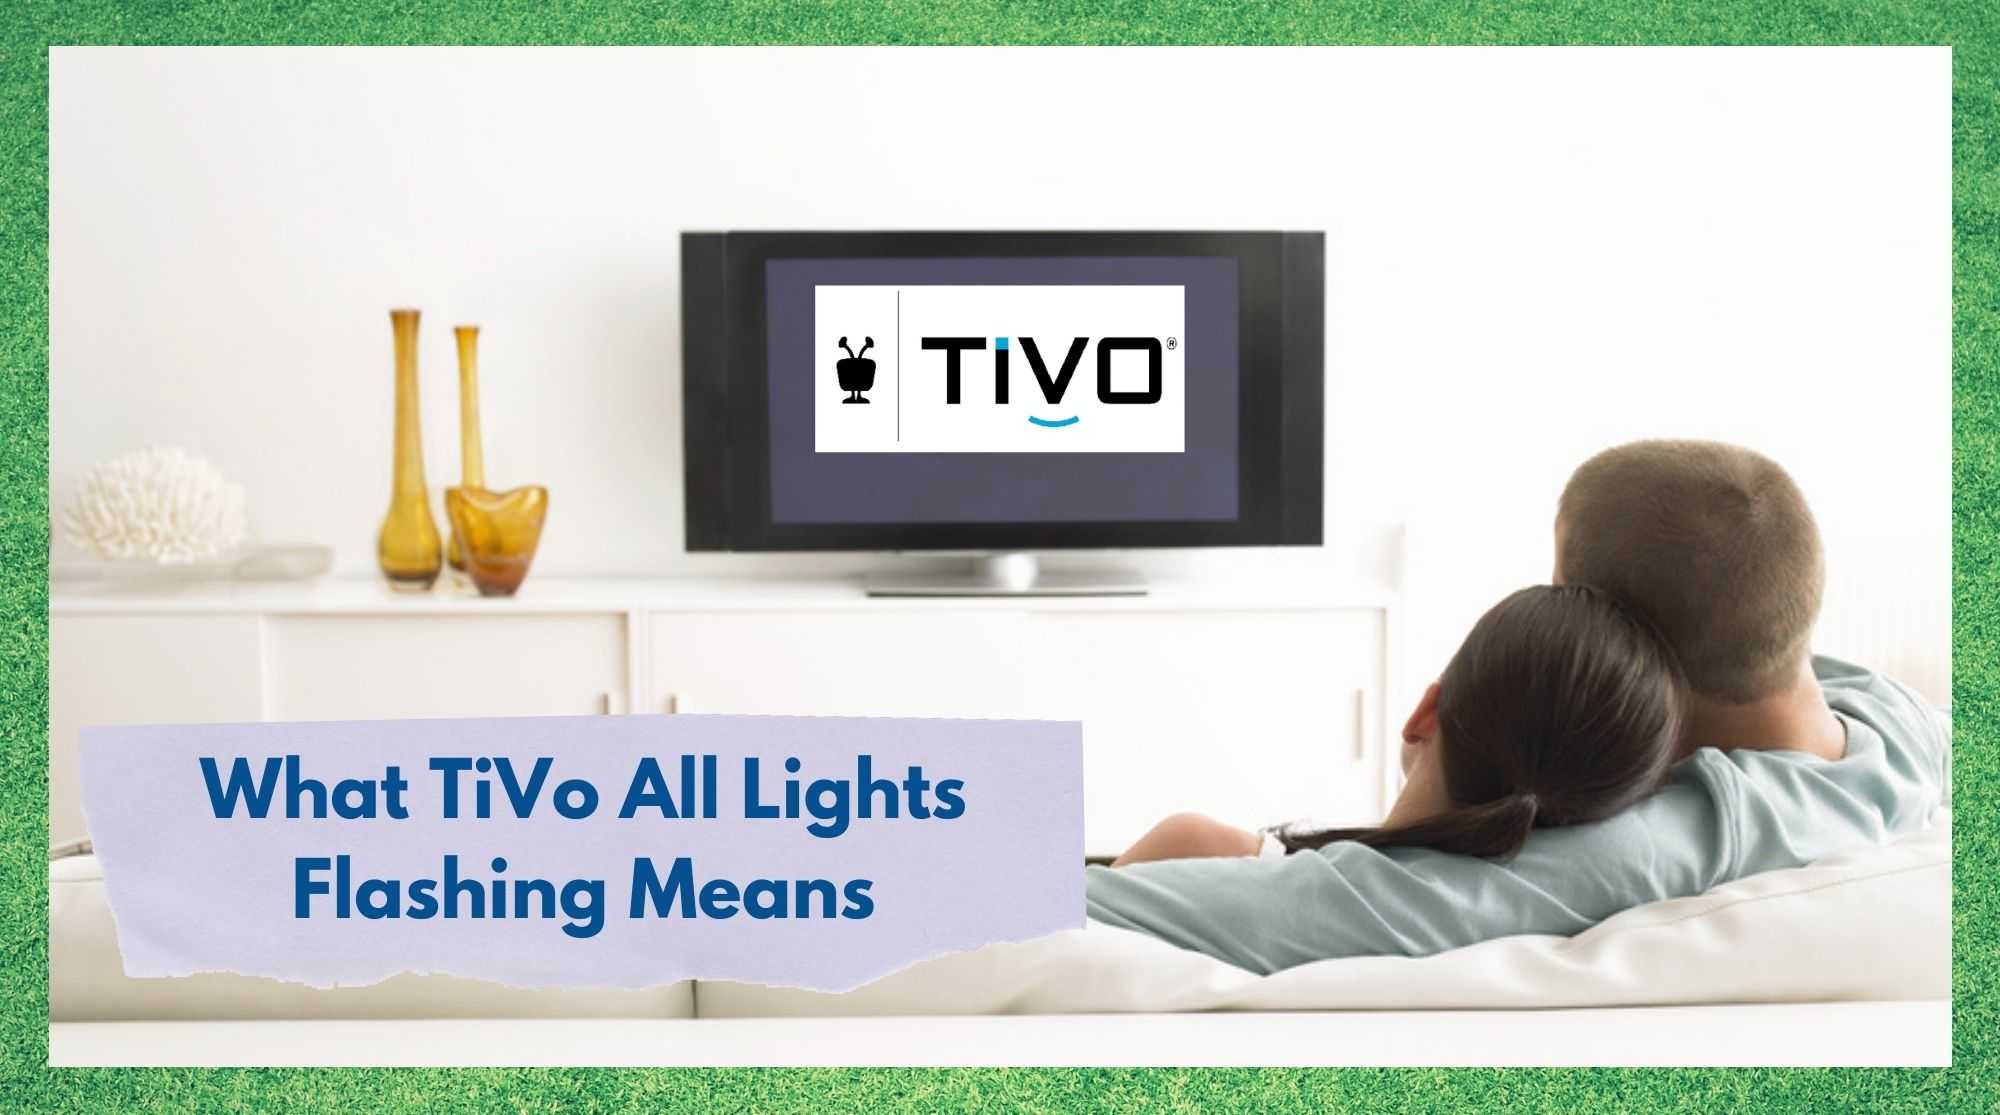 TiVoలో అన్ని లైట్లు మెరుస్తున్నాయి: సాధ్యమైన కారణాలు &amp; ఏం చేయాలి